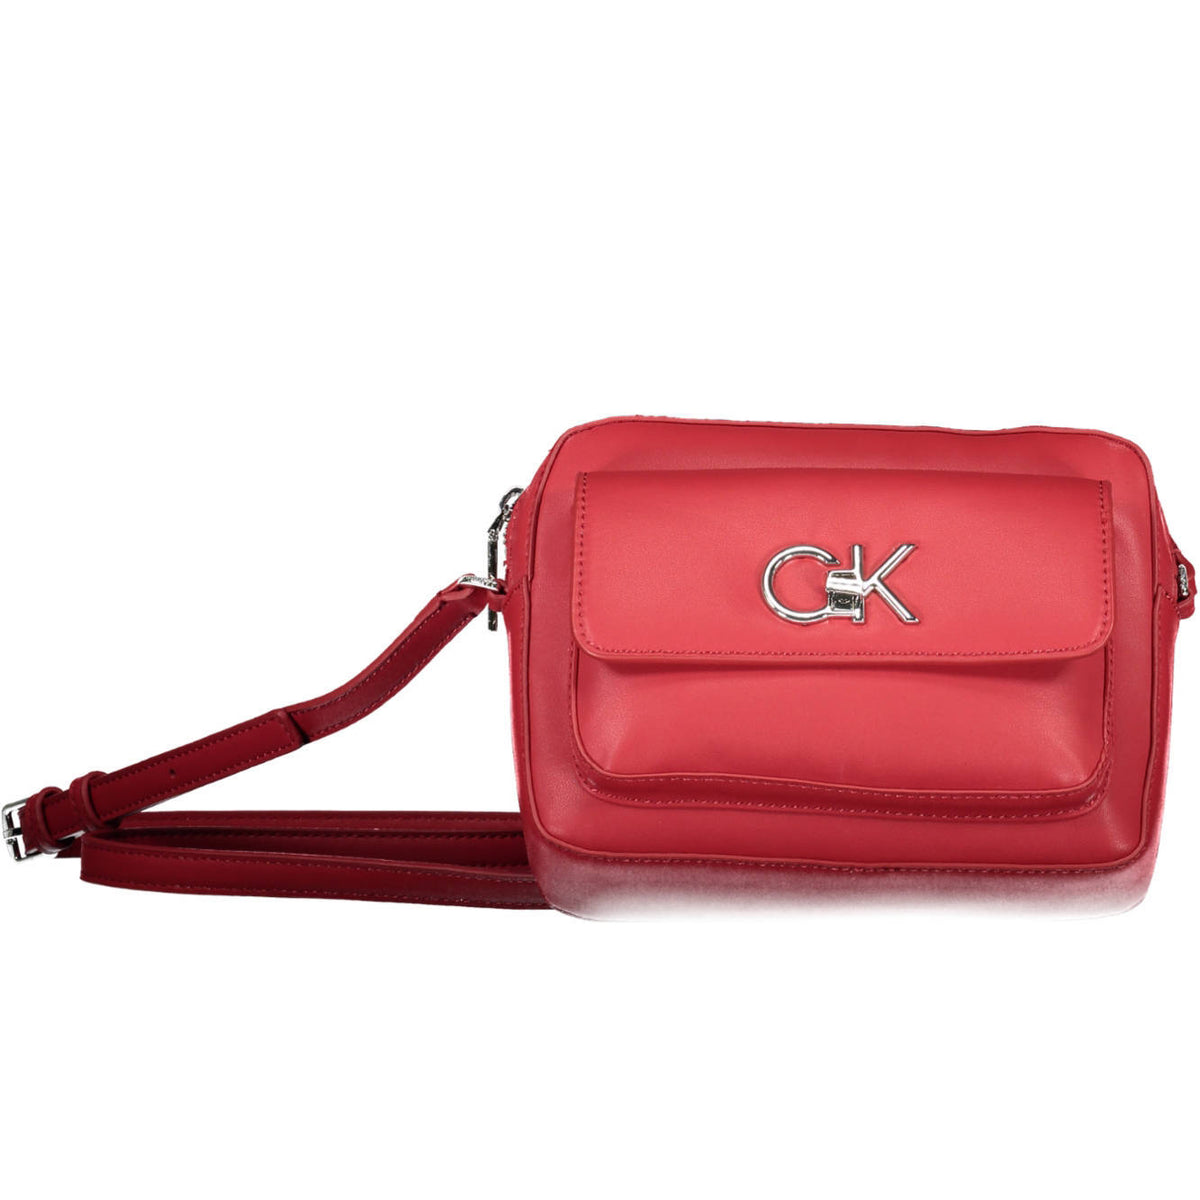 CALVIN KLEIN WOMEN'S BAG RED